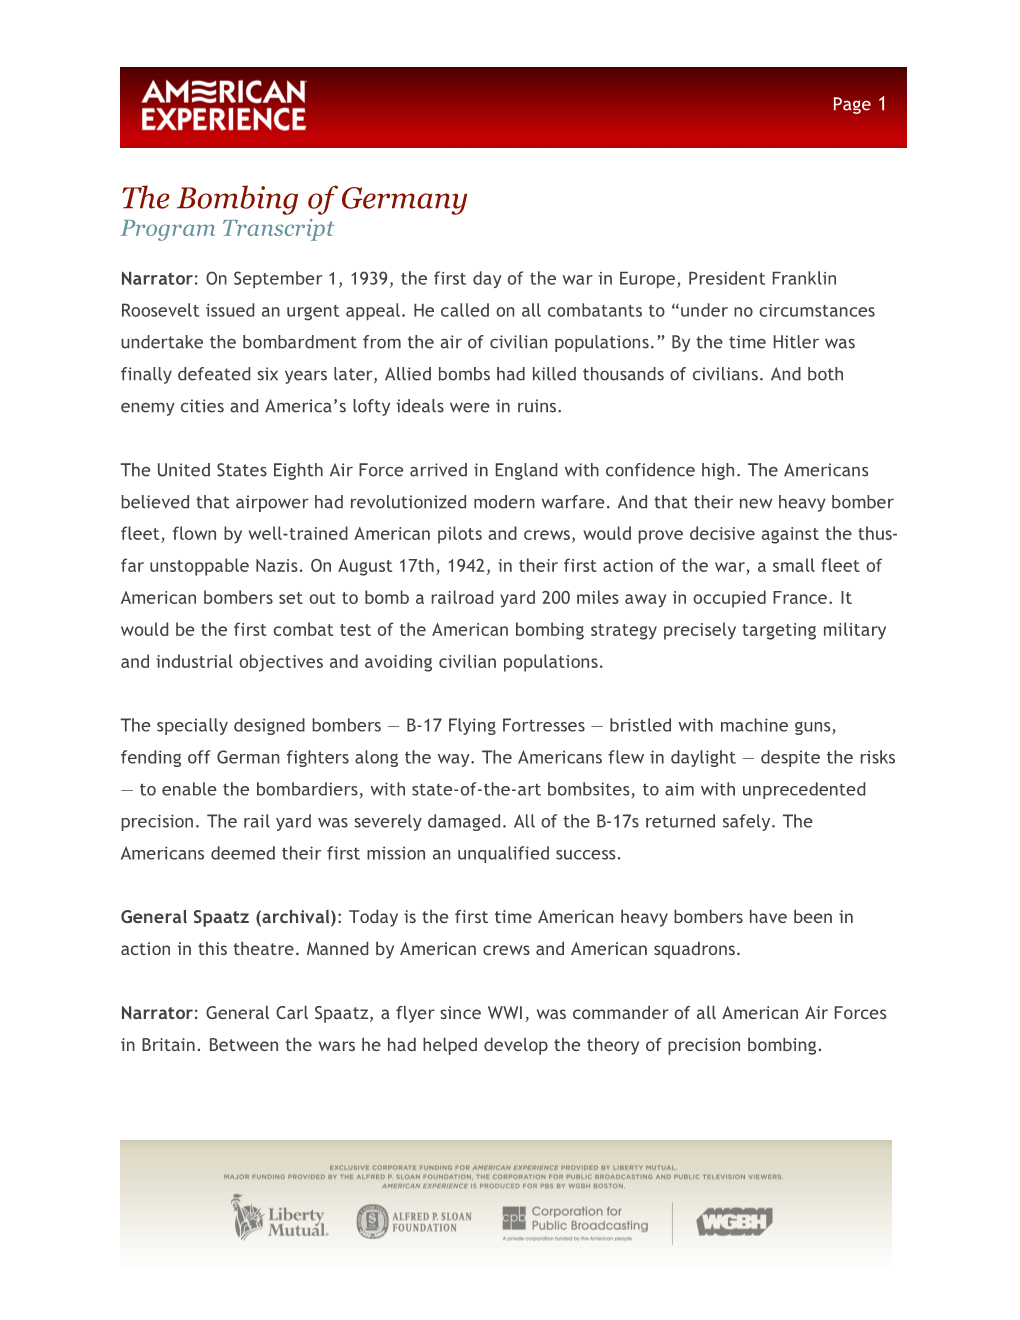 The Bombing of Germany Program Transcript